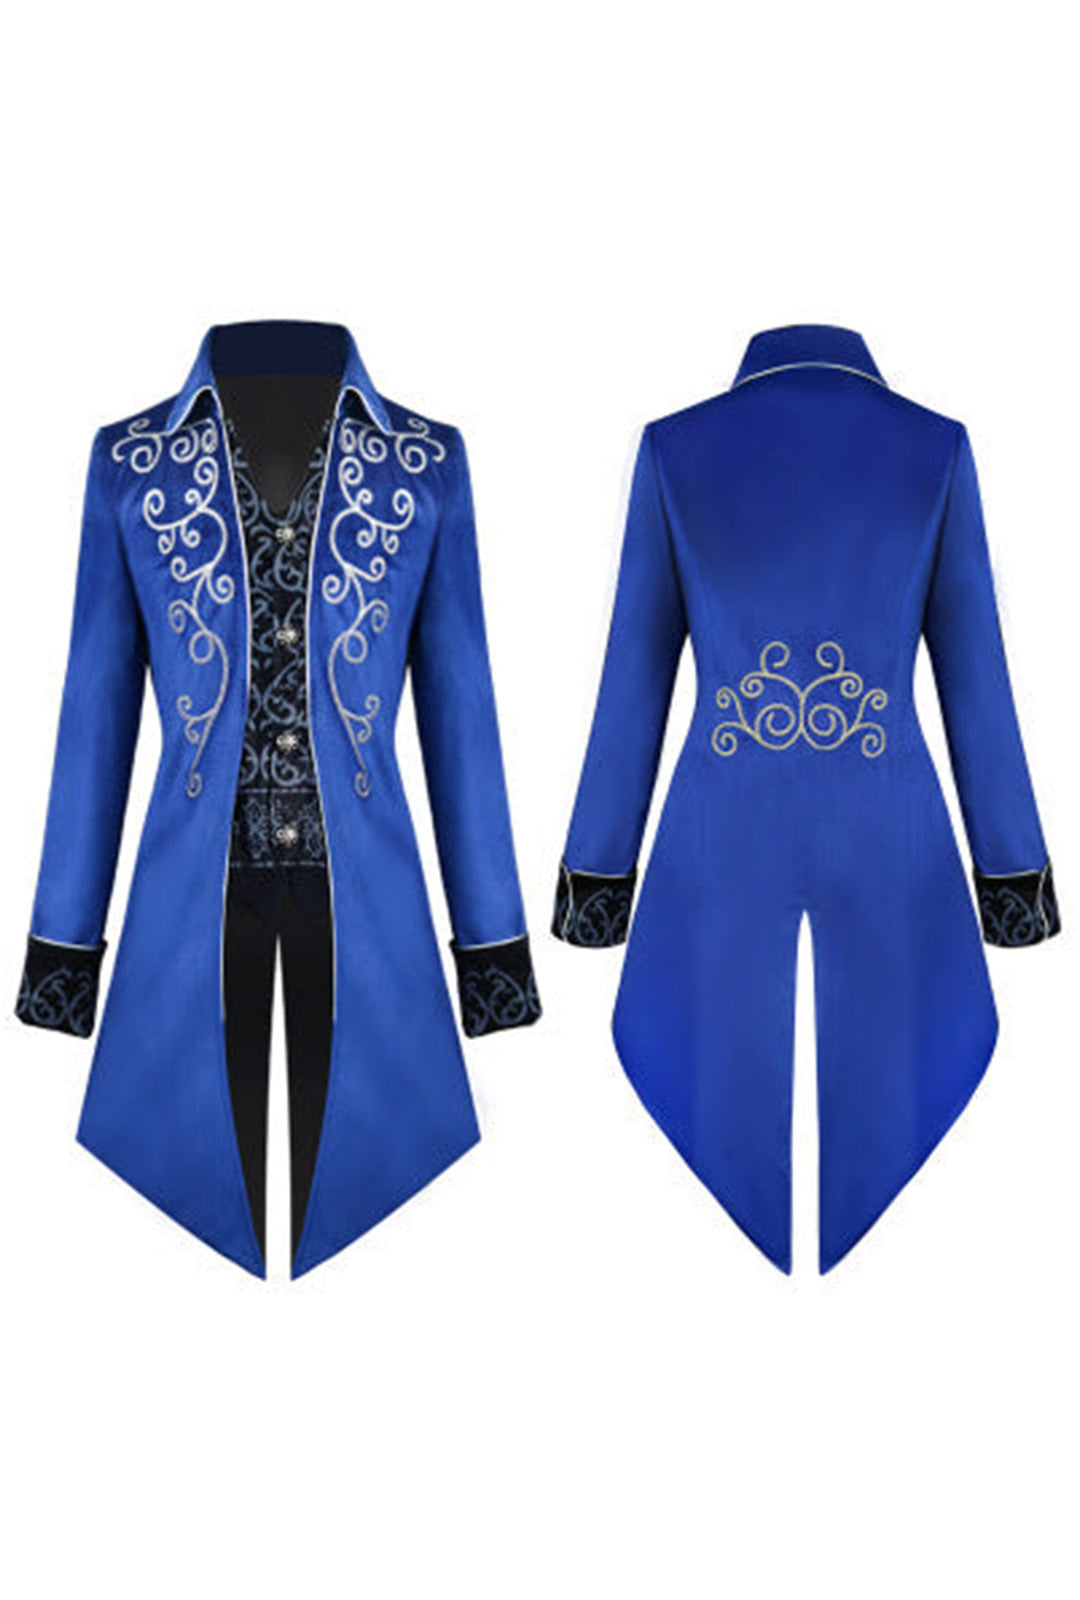 Blue Baroque Steampunk Jacket – Hurly-Burly